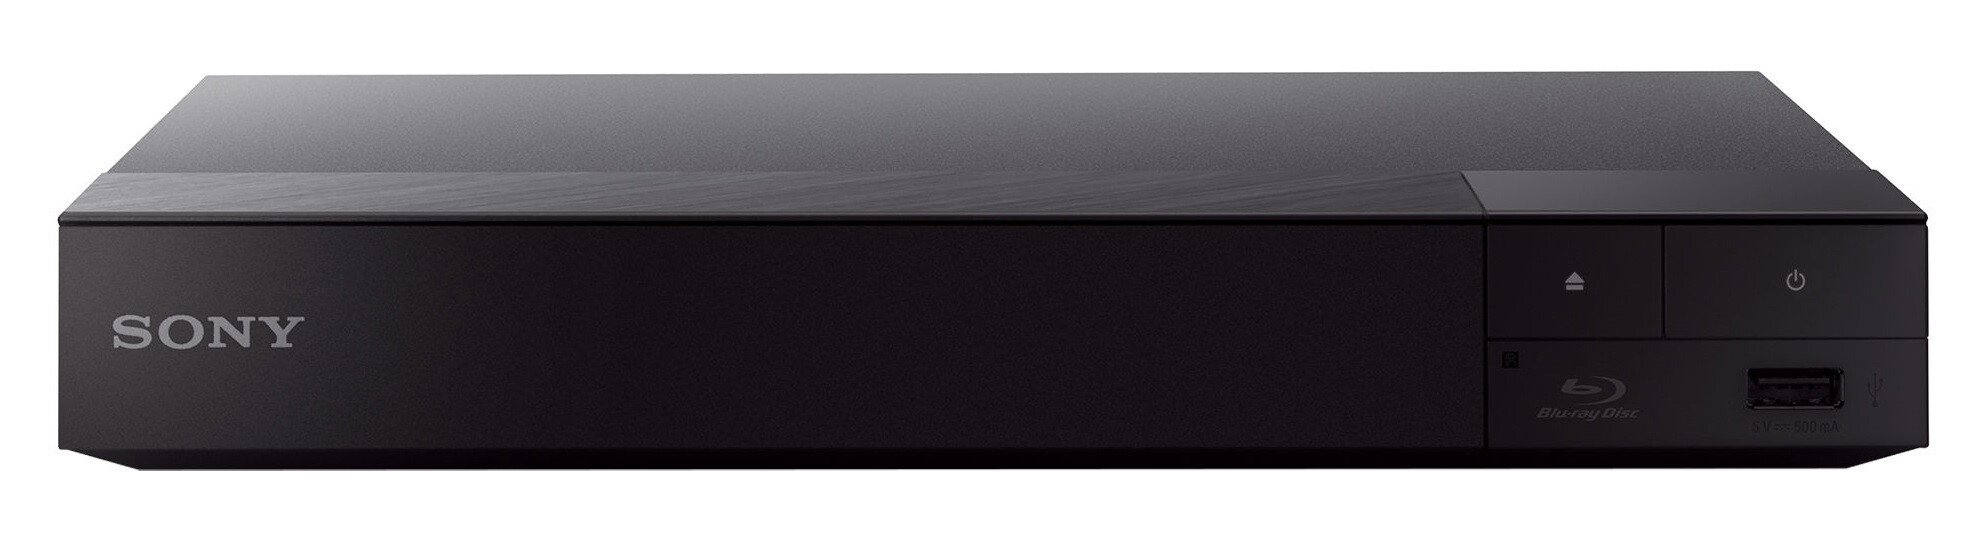 Sony BDPS6700B Smart 3D Blu-ray Player – Black (BDPS6700B.CEK) #359188